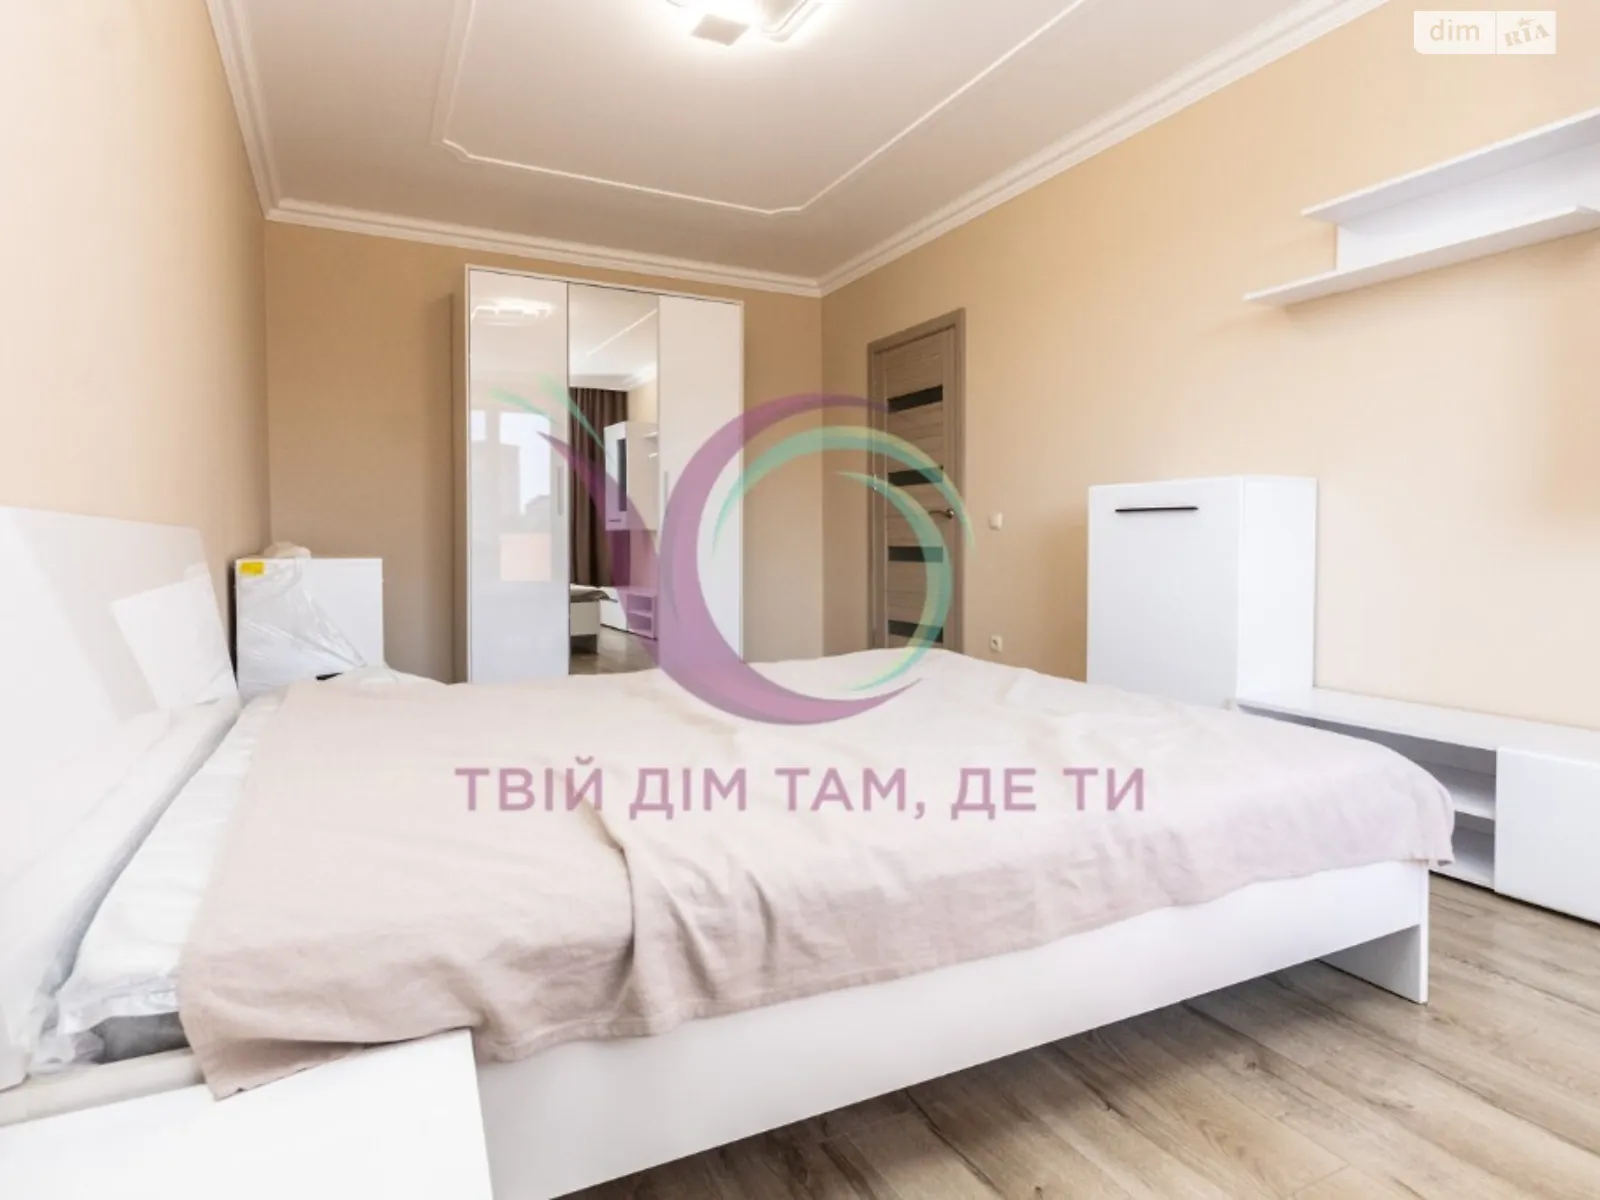 Сдается в аренду 1-комнатная квартира 49 кв. м в Ивано-Франковске - фото 3